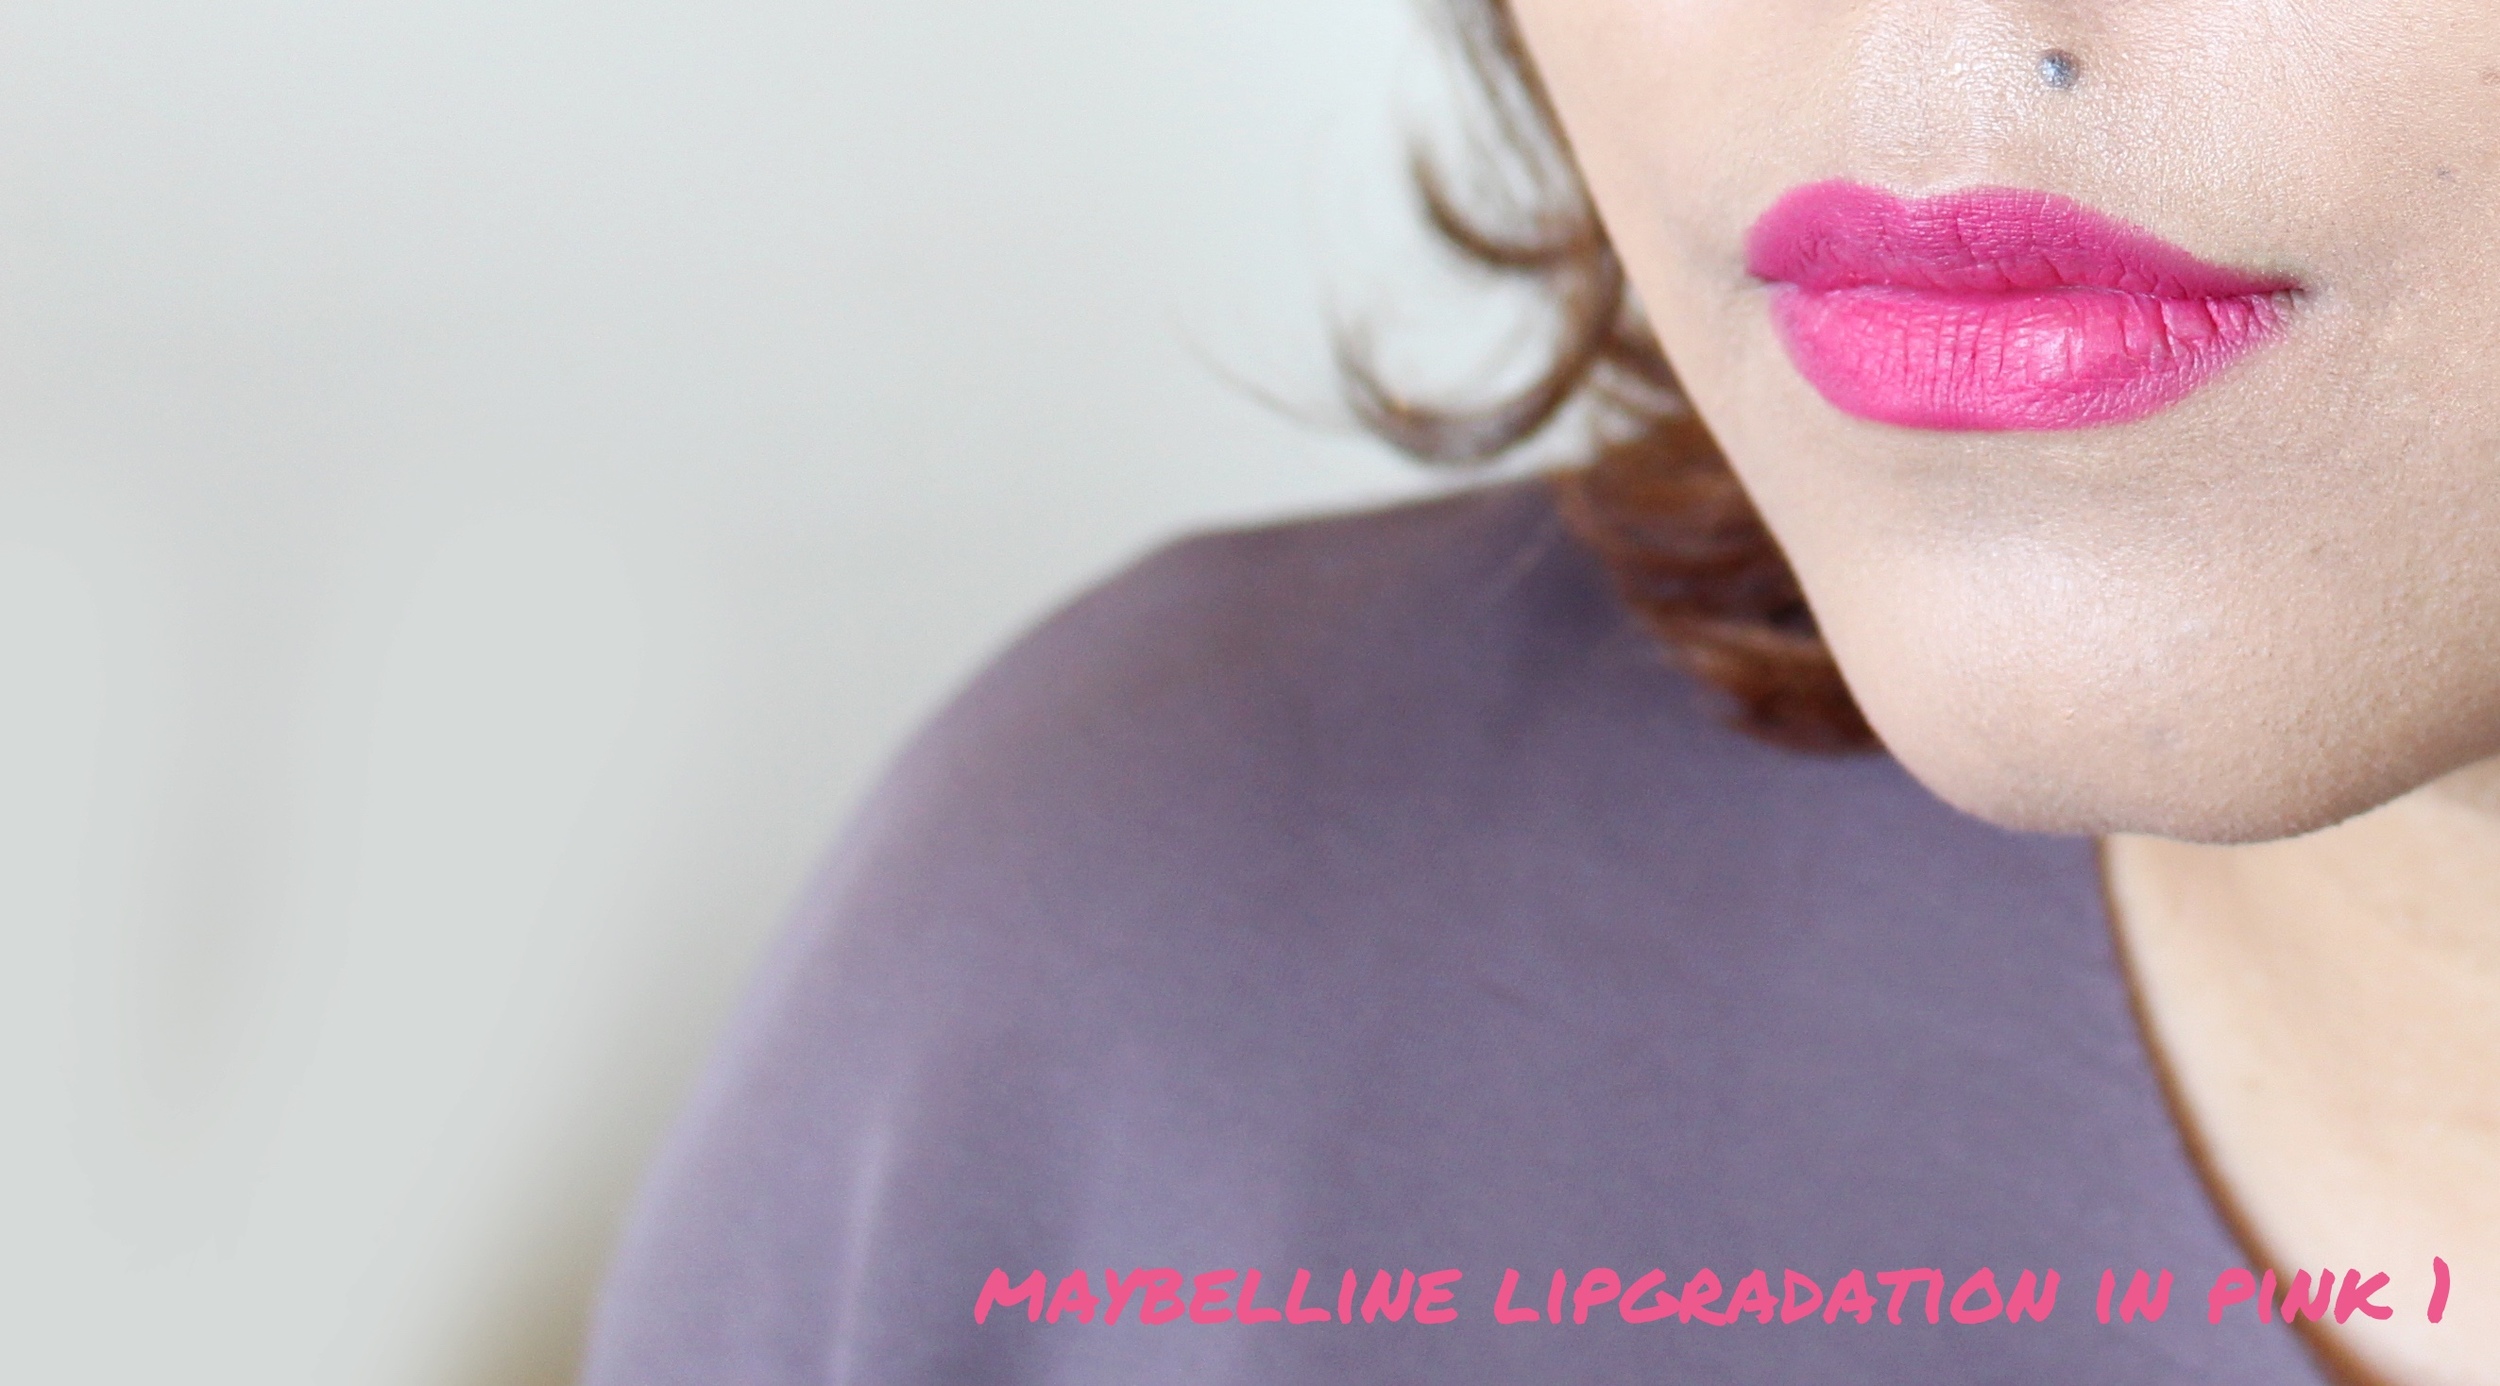 Maybelline Lipgradation pink 1.jpg